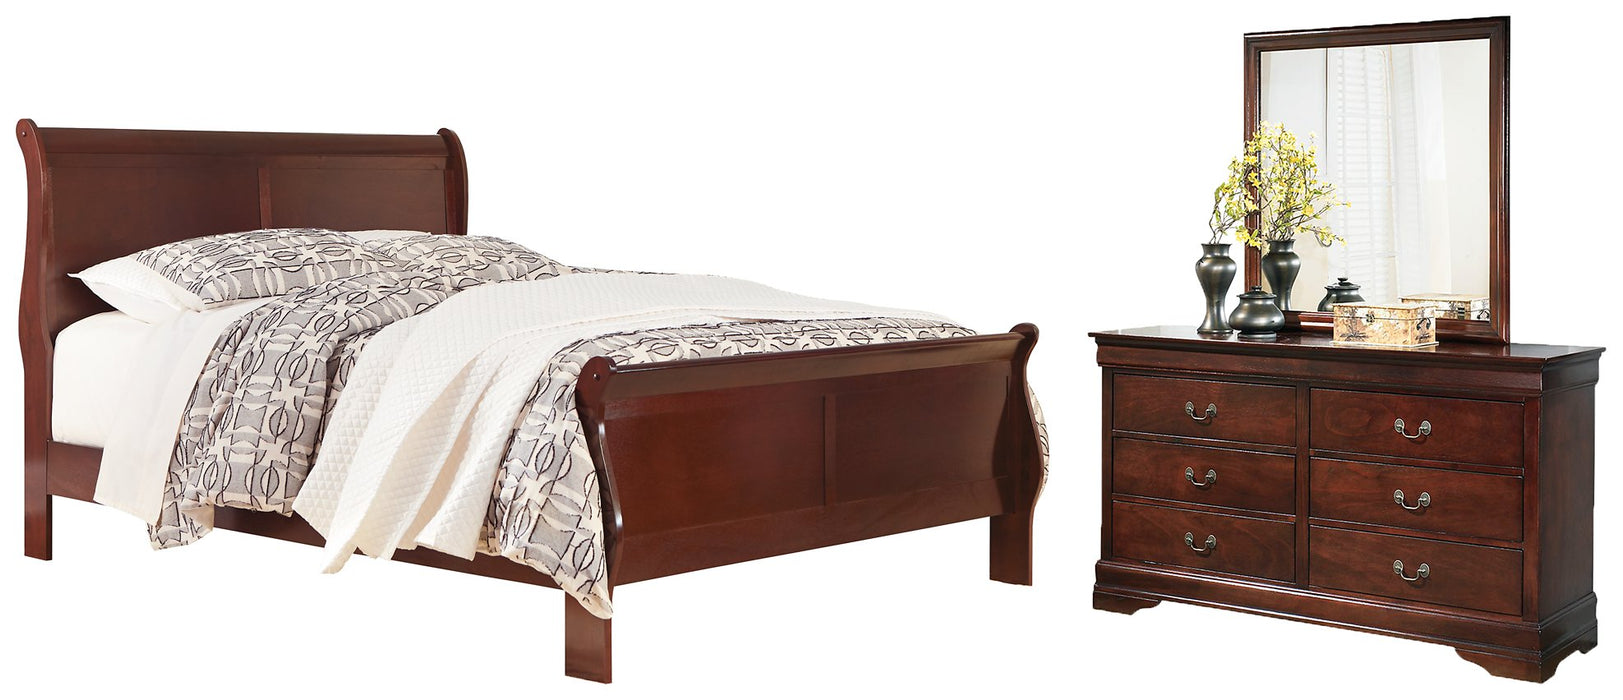 Alisdair Bedroom Set - Red Barn Furniture (Church, Virginia)